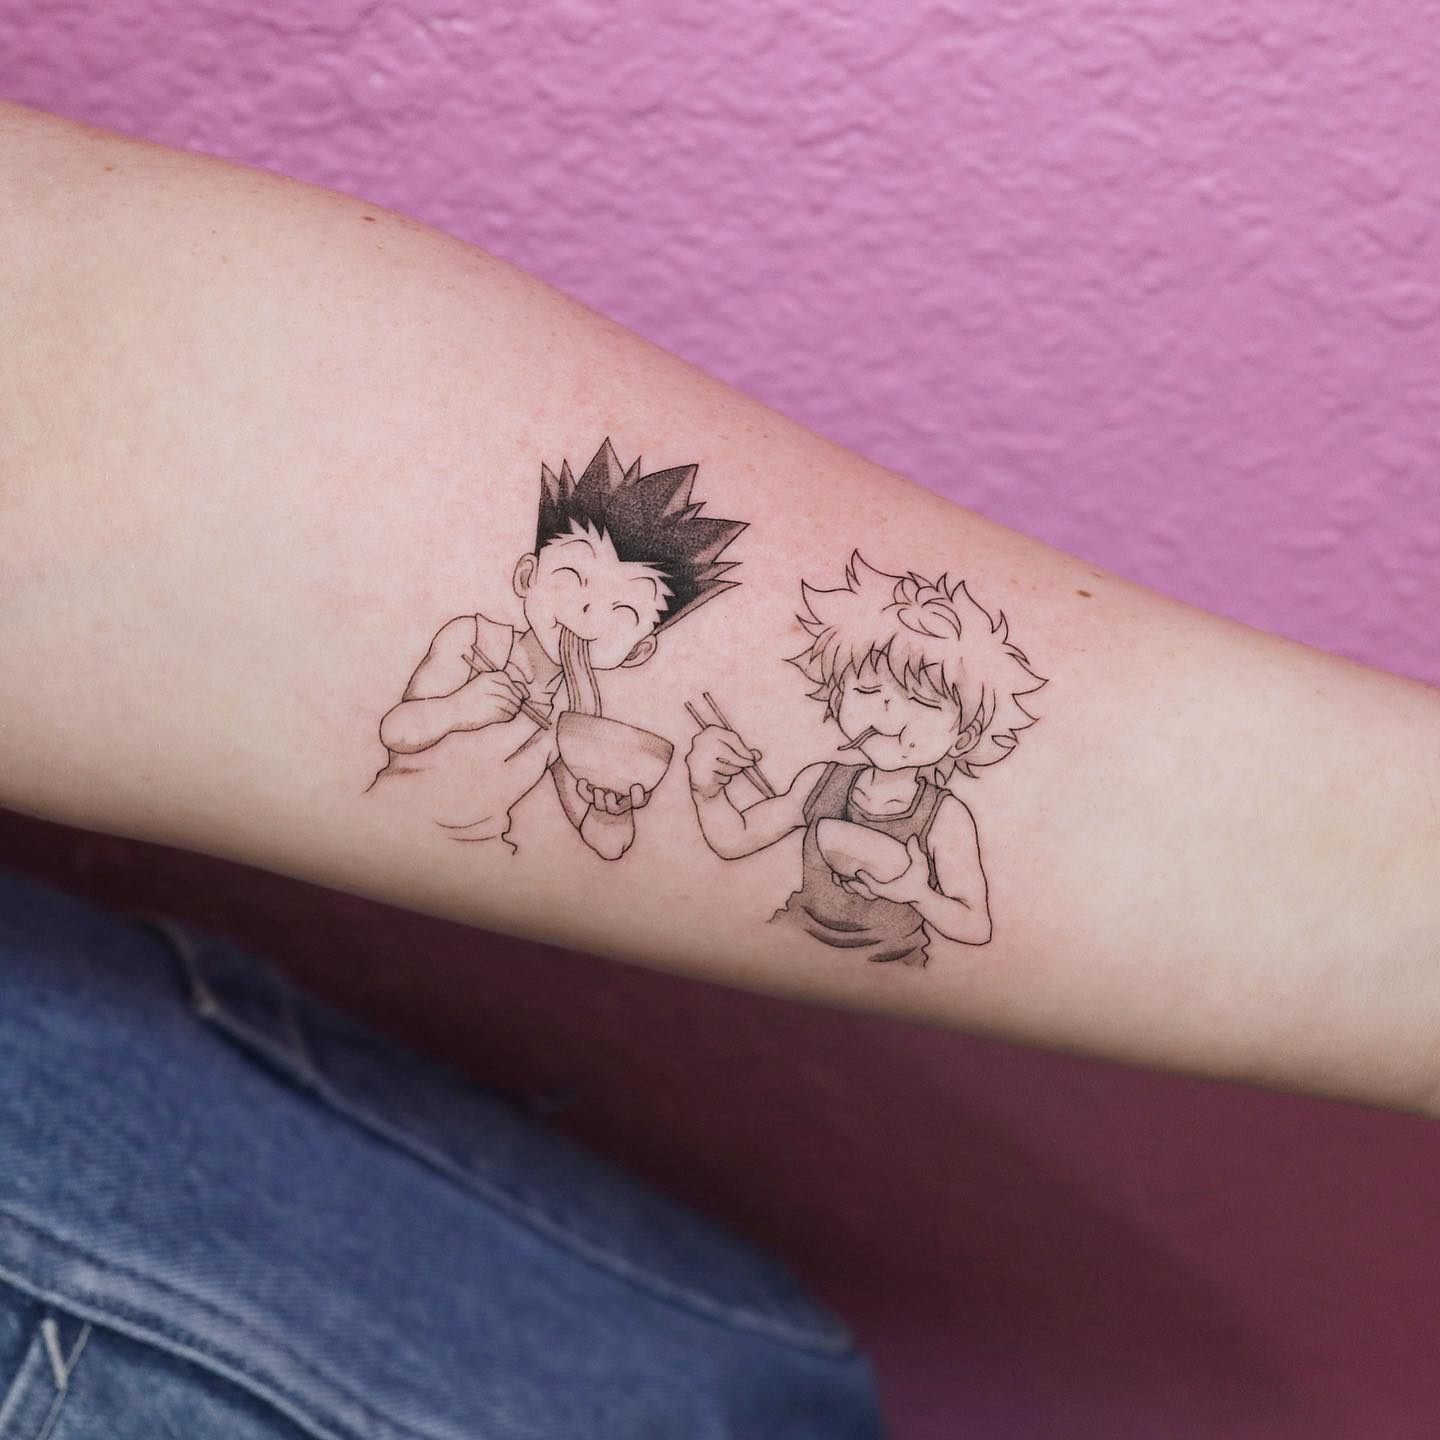 Tatuaje del dúo Gon y Killua